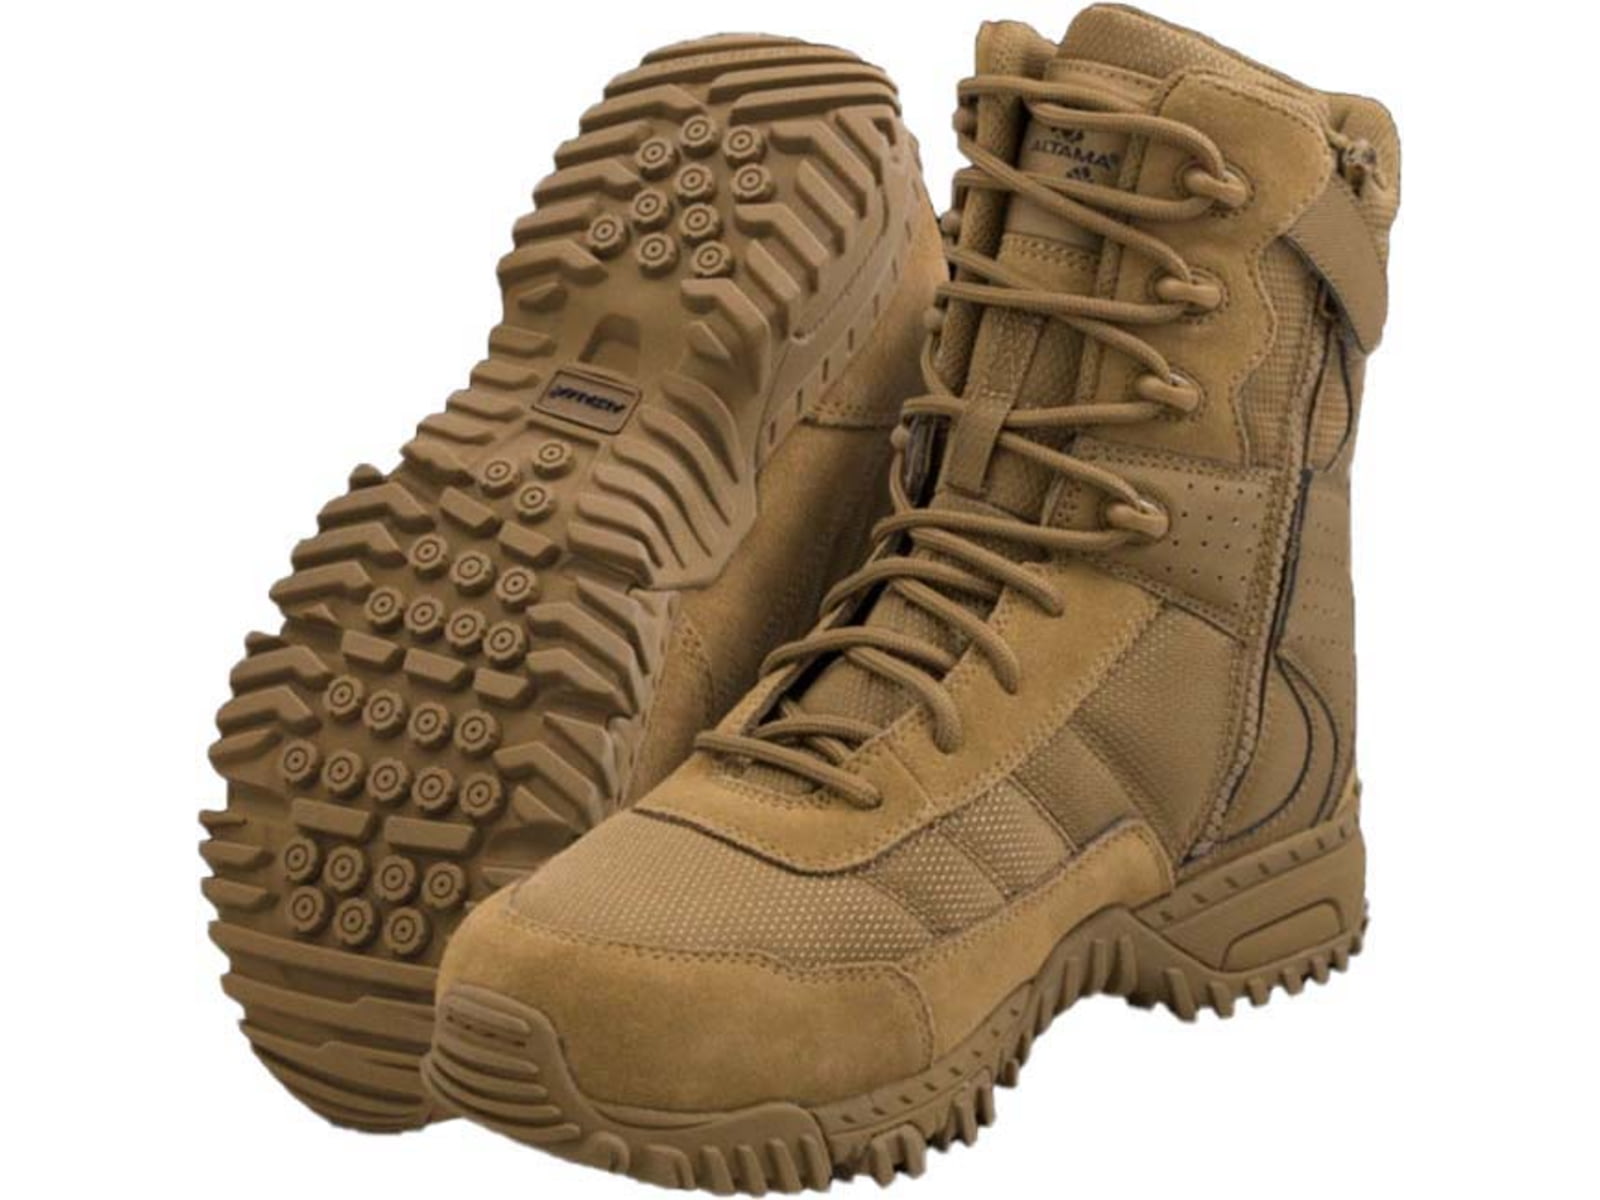 Altama Vengeance 8in Slip Resistant Side-Zip Boot - Mens, W11, Coyote, 305303-11 - image 1 of 2